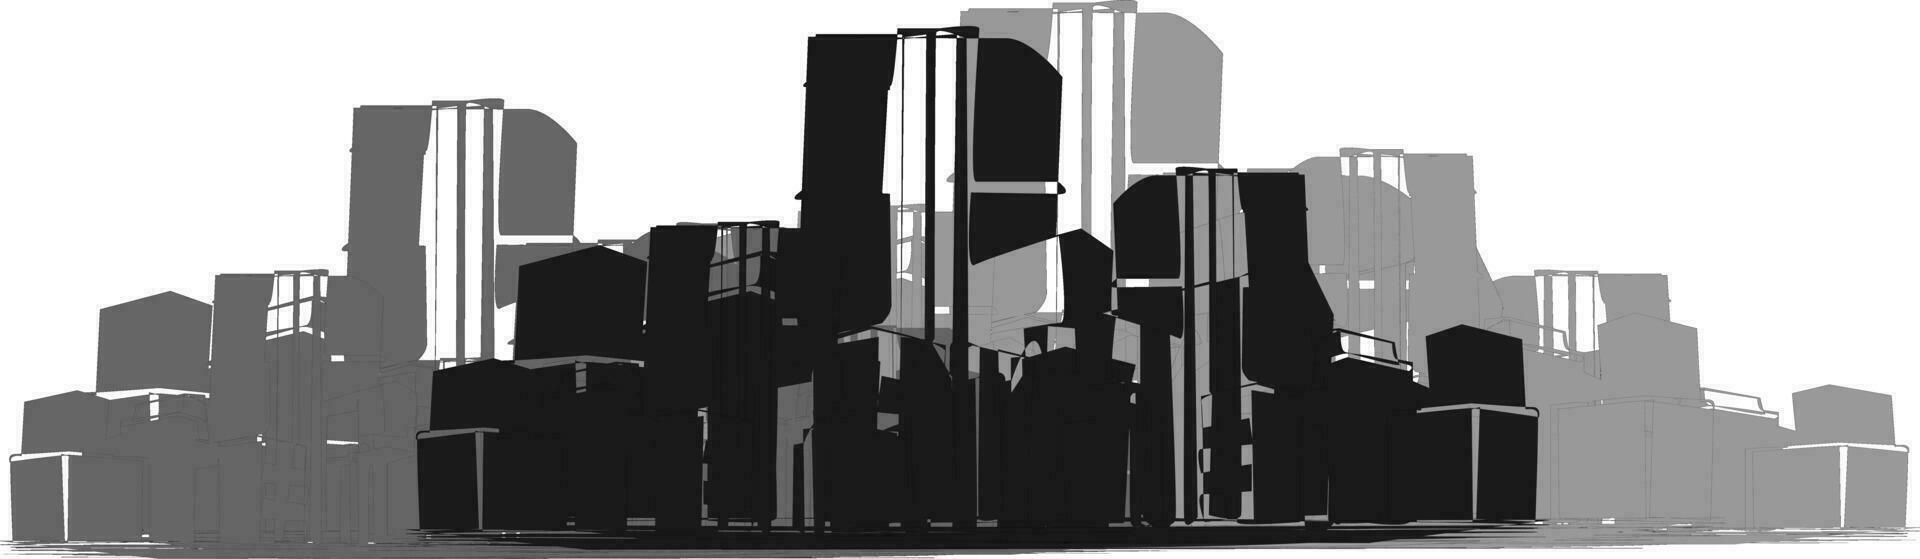 black and white city skyline vector